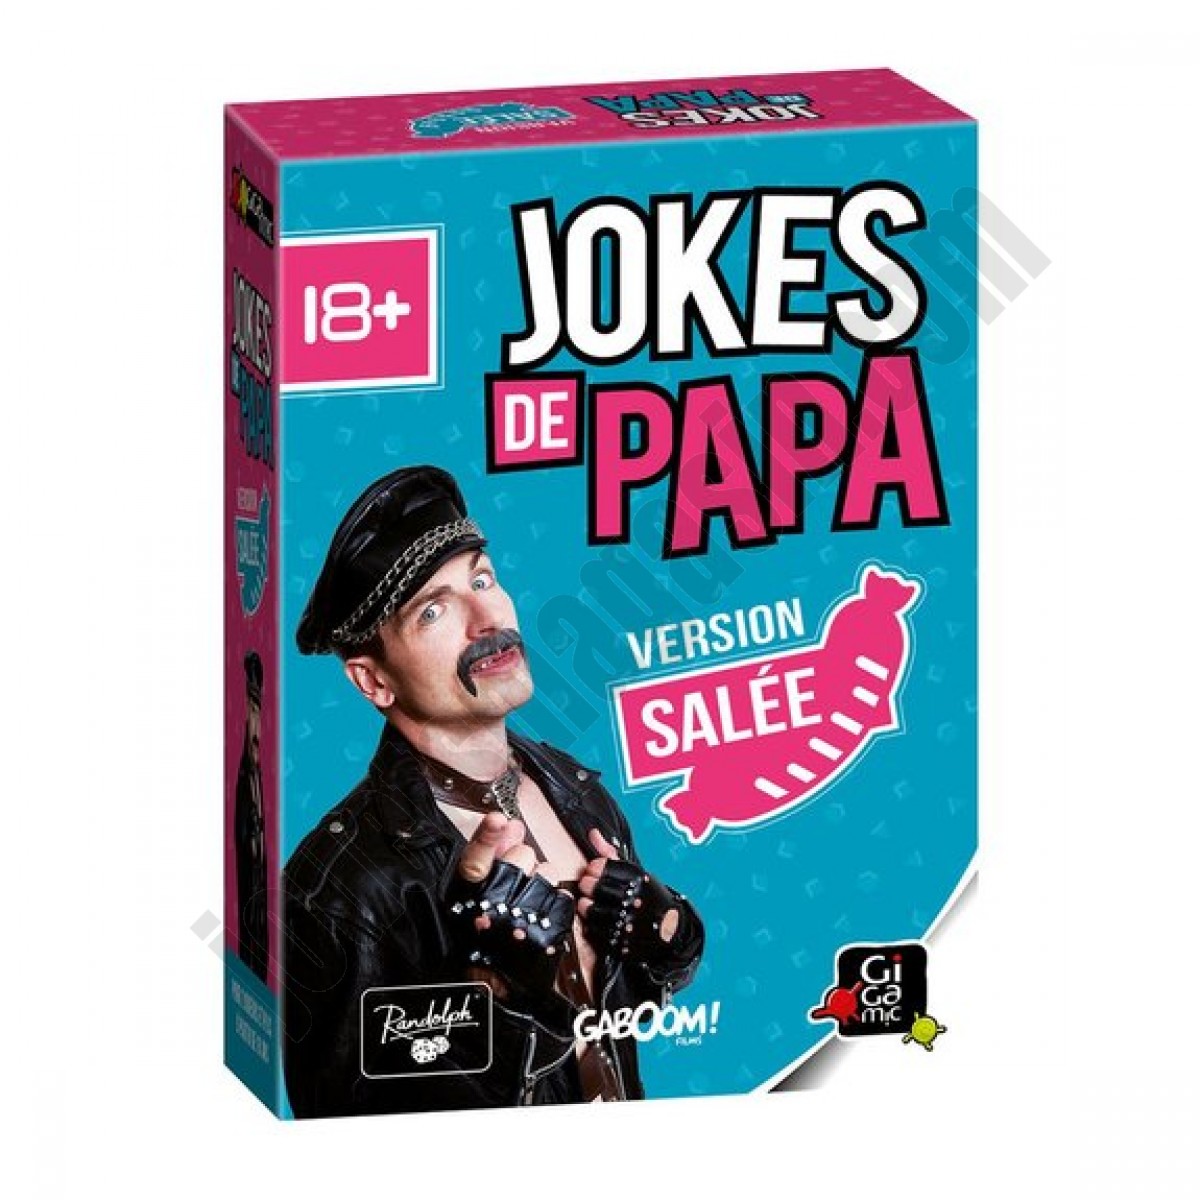 Jokes de papa - version salée ◆◆◆ Nouveau - Jokes de papa - version salée ◆◆◆ Nouveau